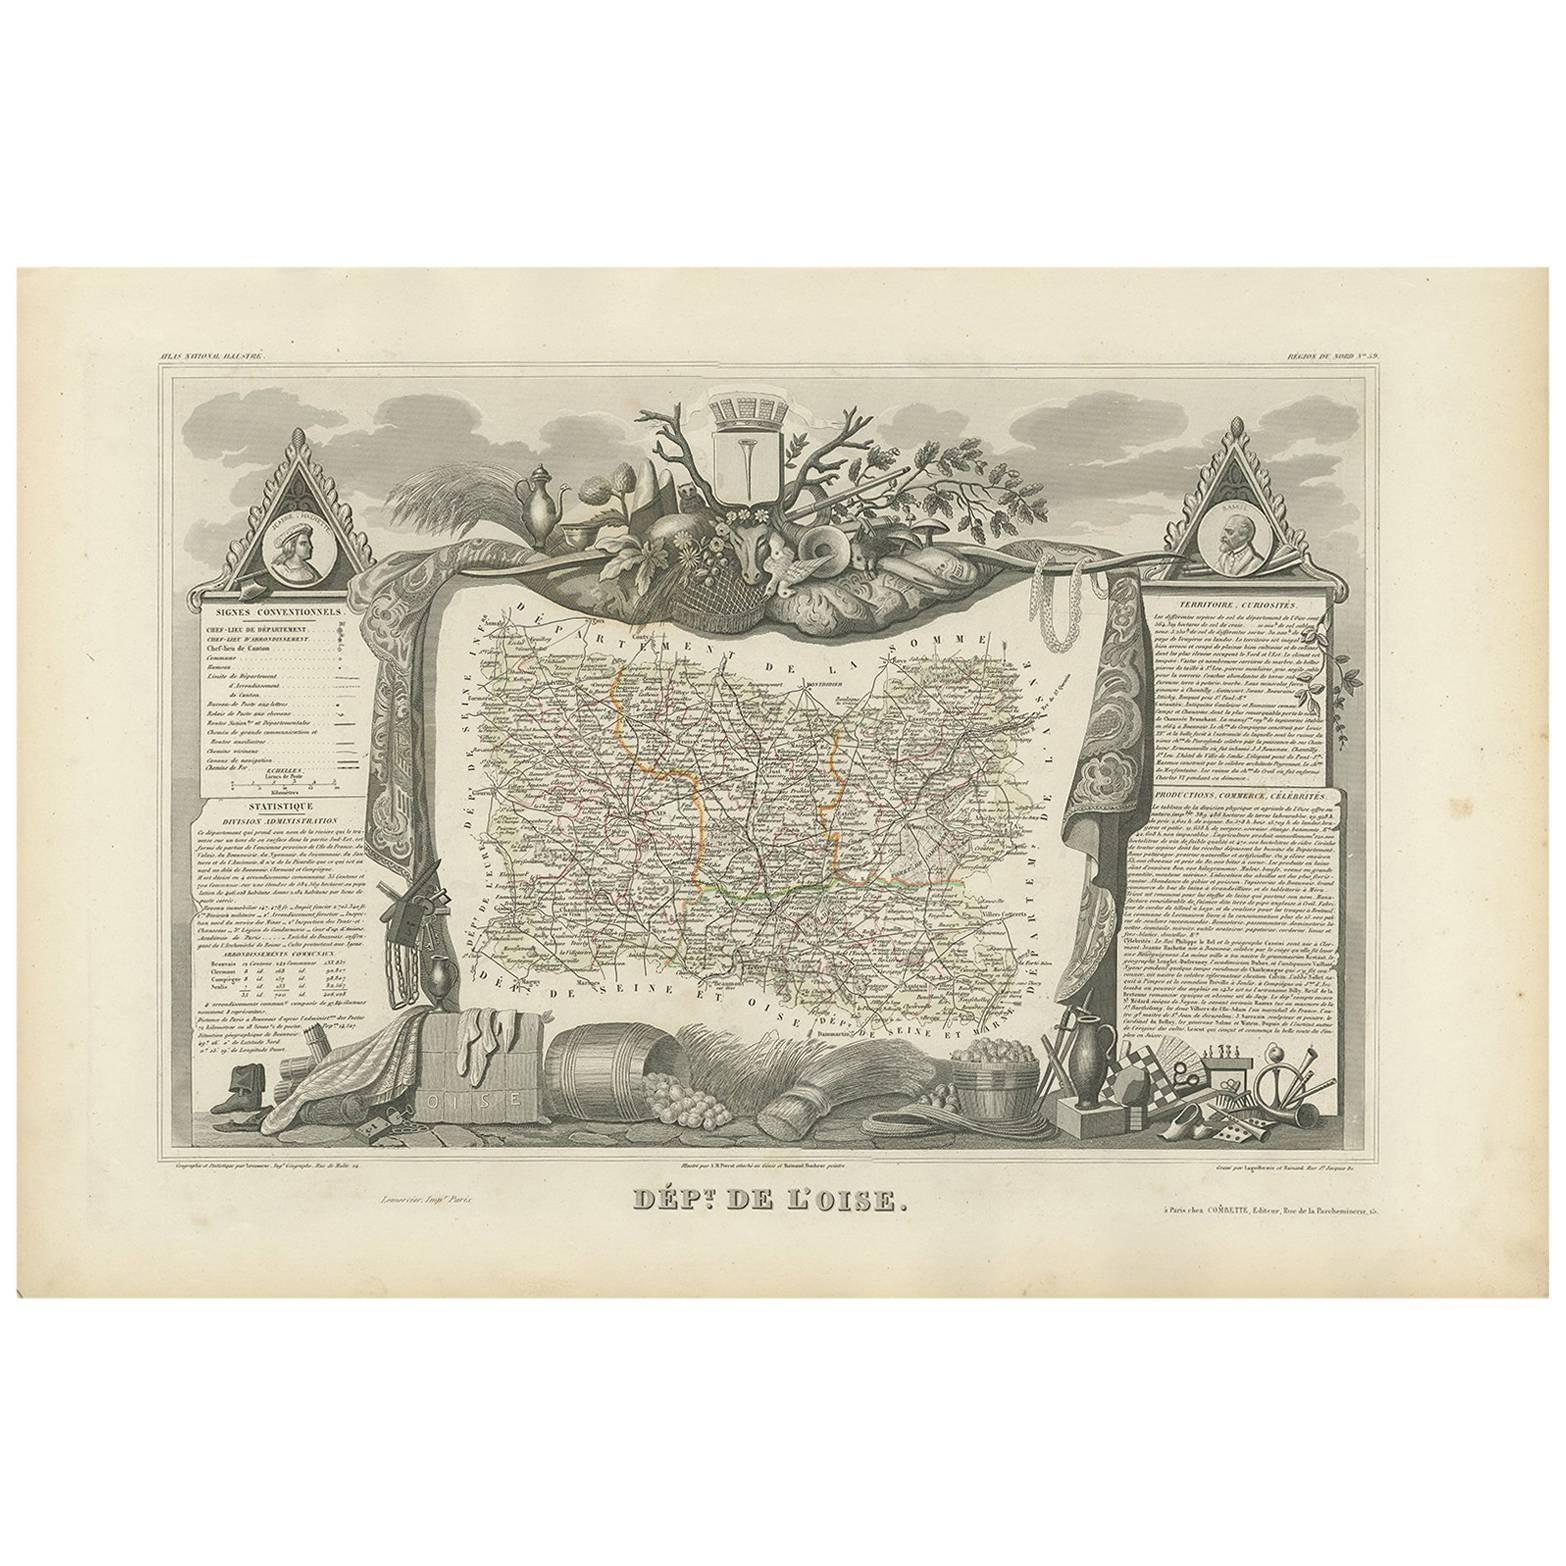 Antique Map of Oise ‘France’ by V. Levasseur, 1854